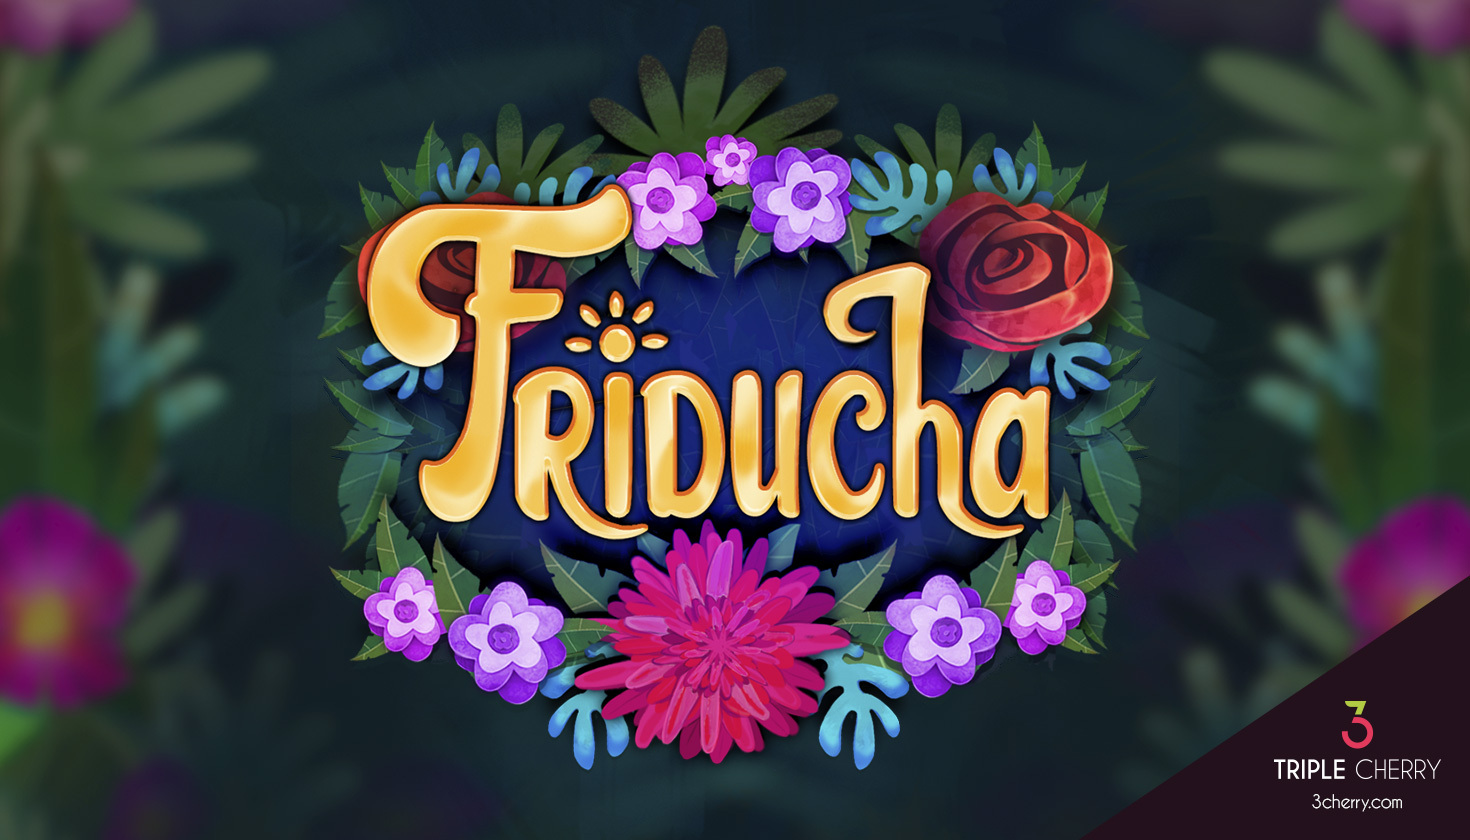 Friducha by Triple Cherry